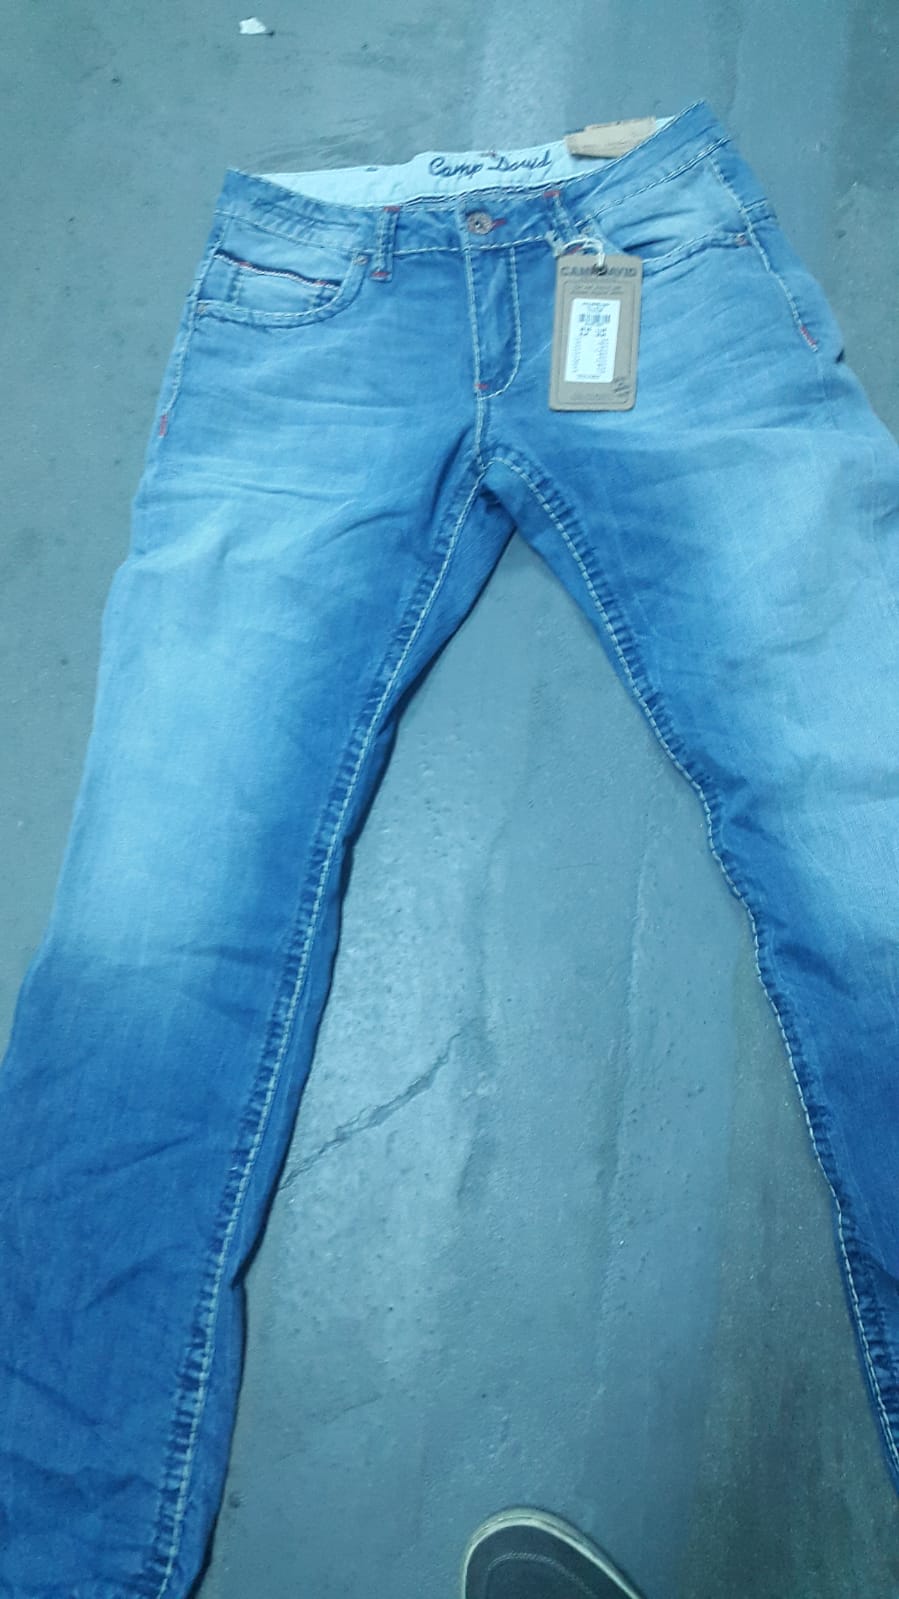 camp david jeans price